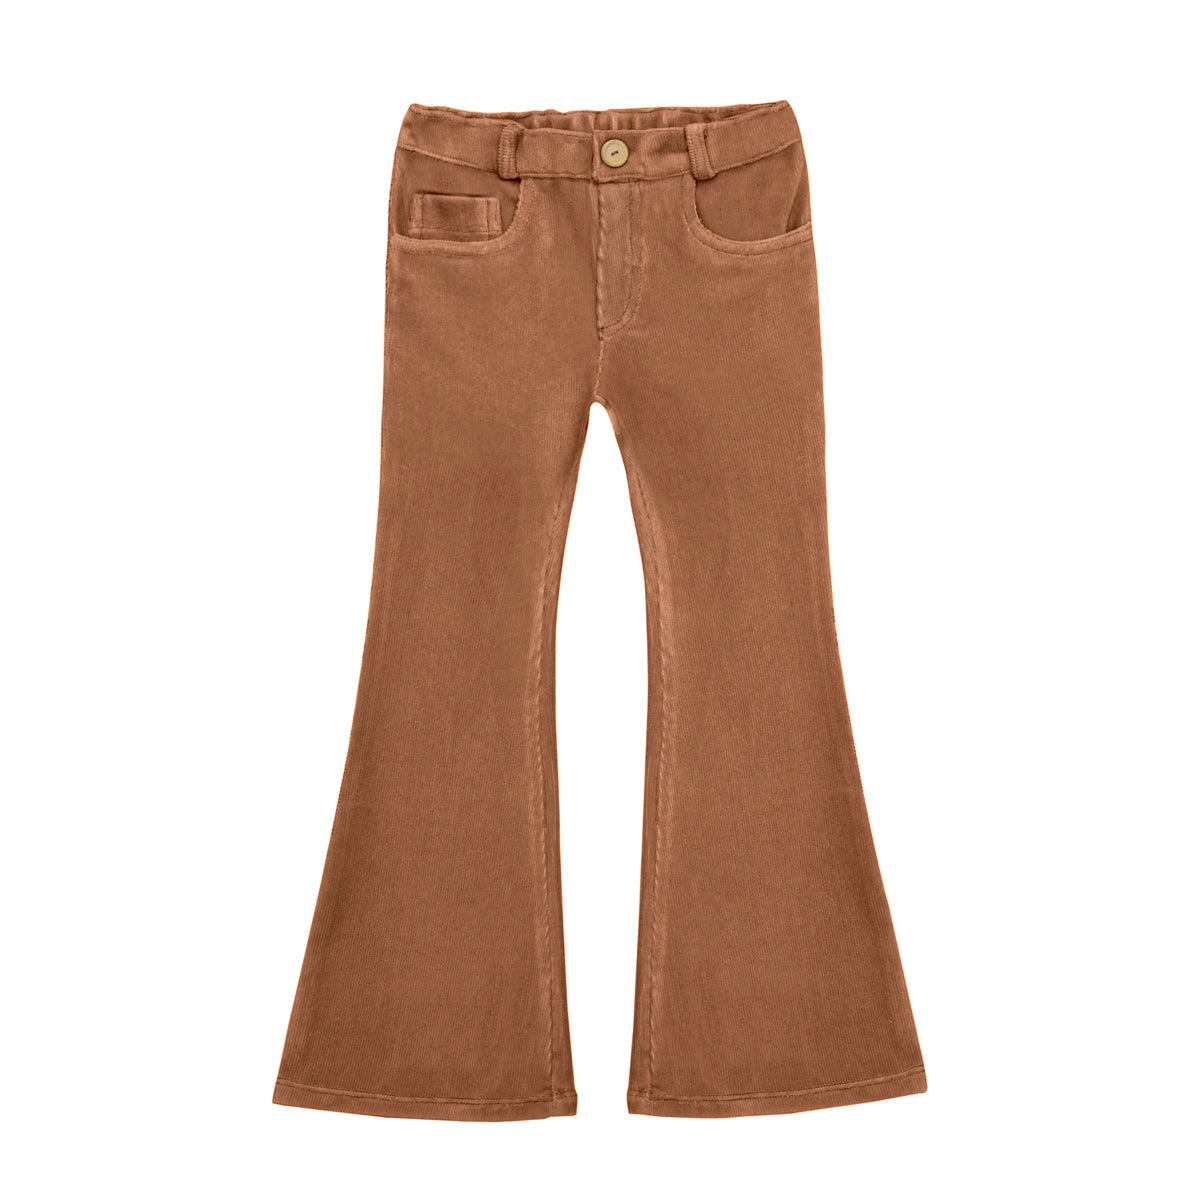 LITTLE HEDONIST - Pantalon neuf en velours côtelé marron